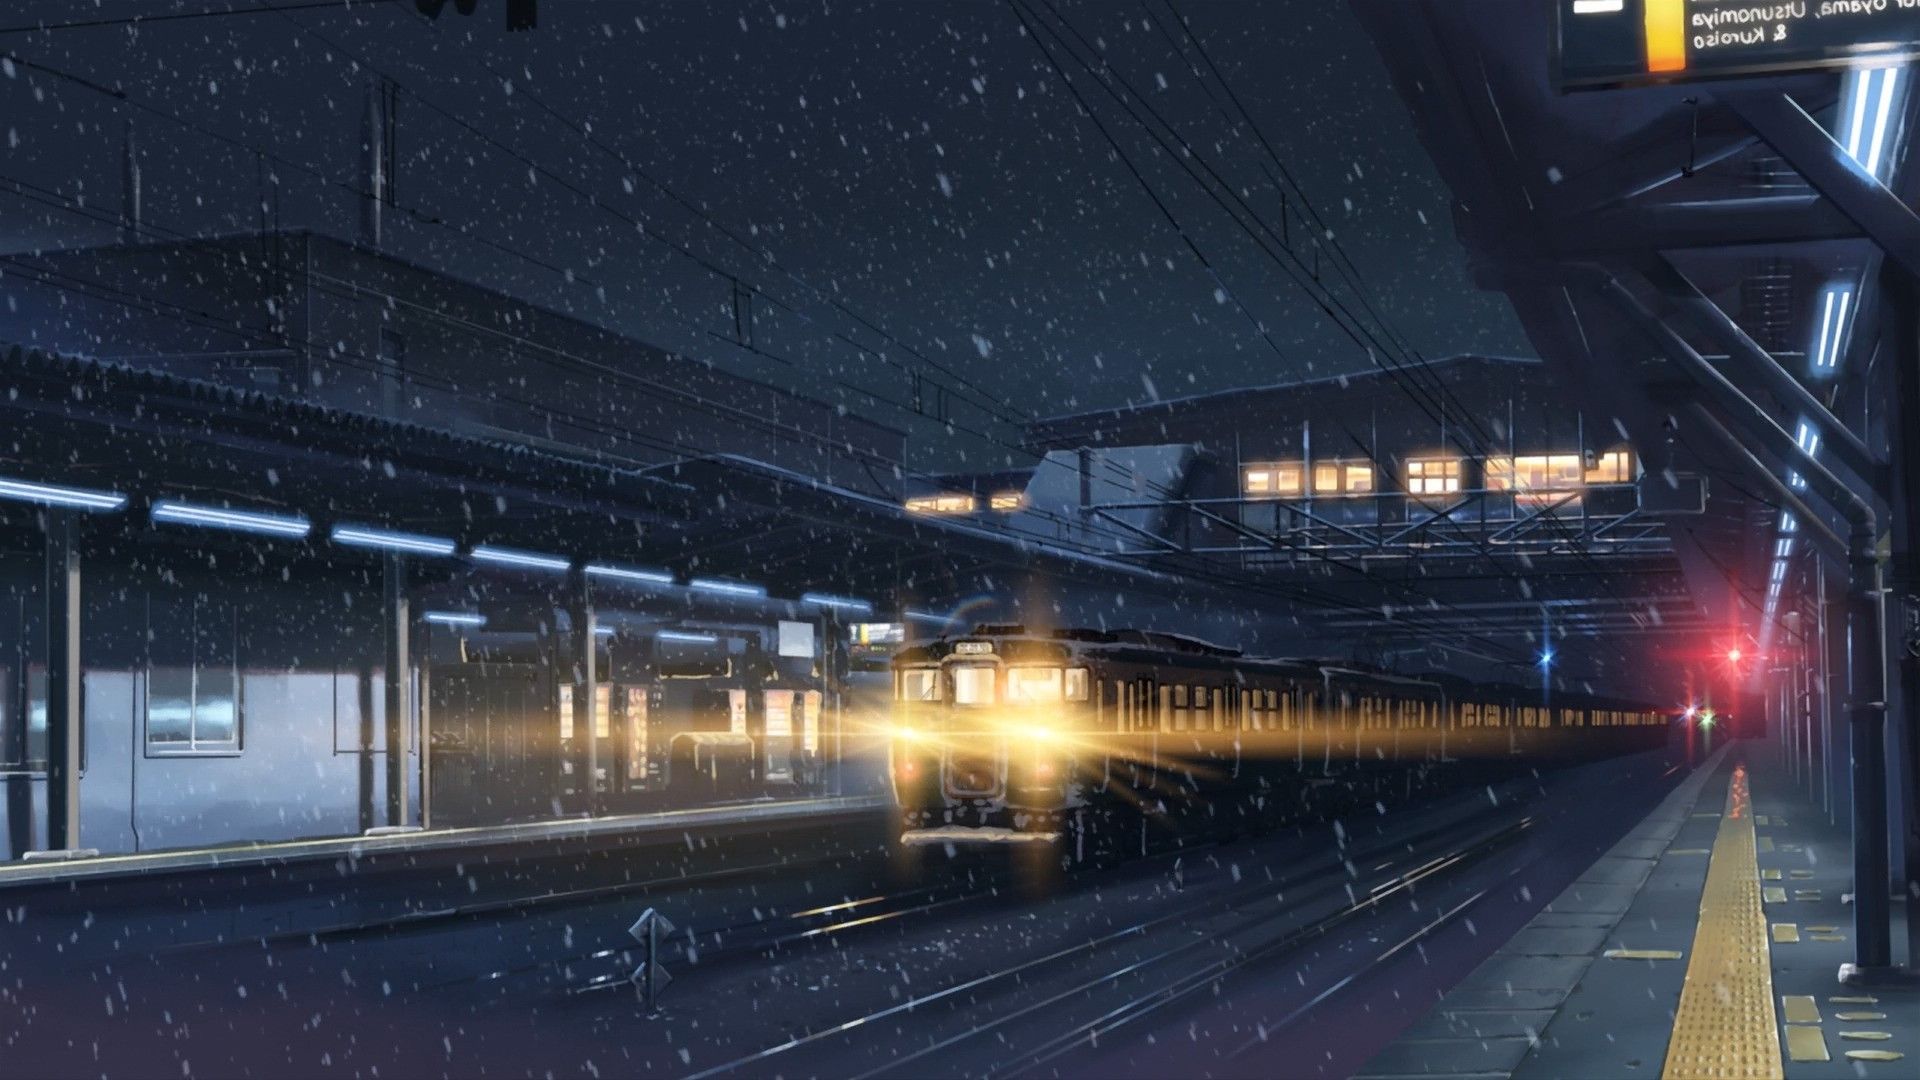 1920x1080 anime winter lights train station train snow night 5 centimeters per second makoto shinkai wallpaper JPG 327 kB